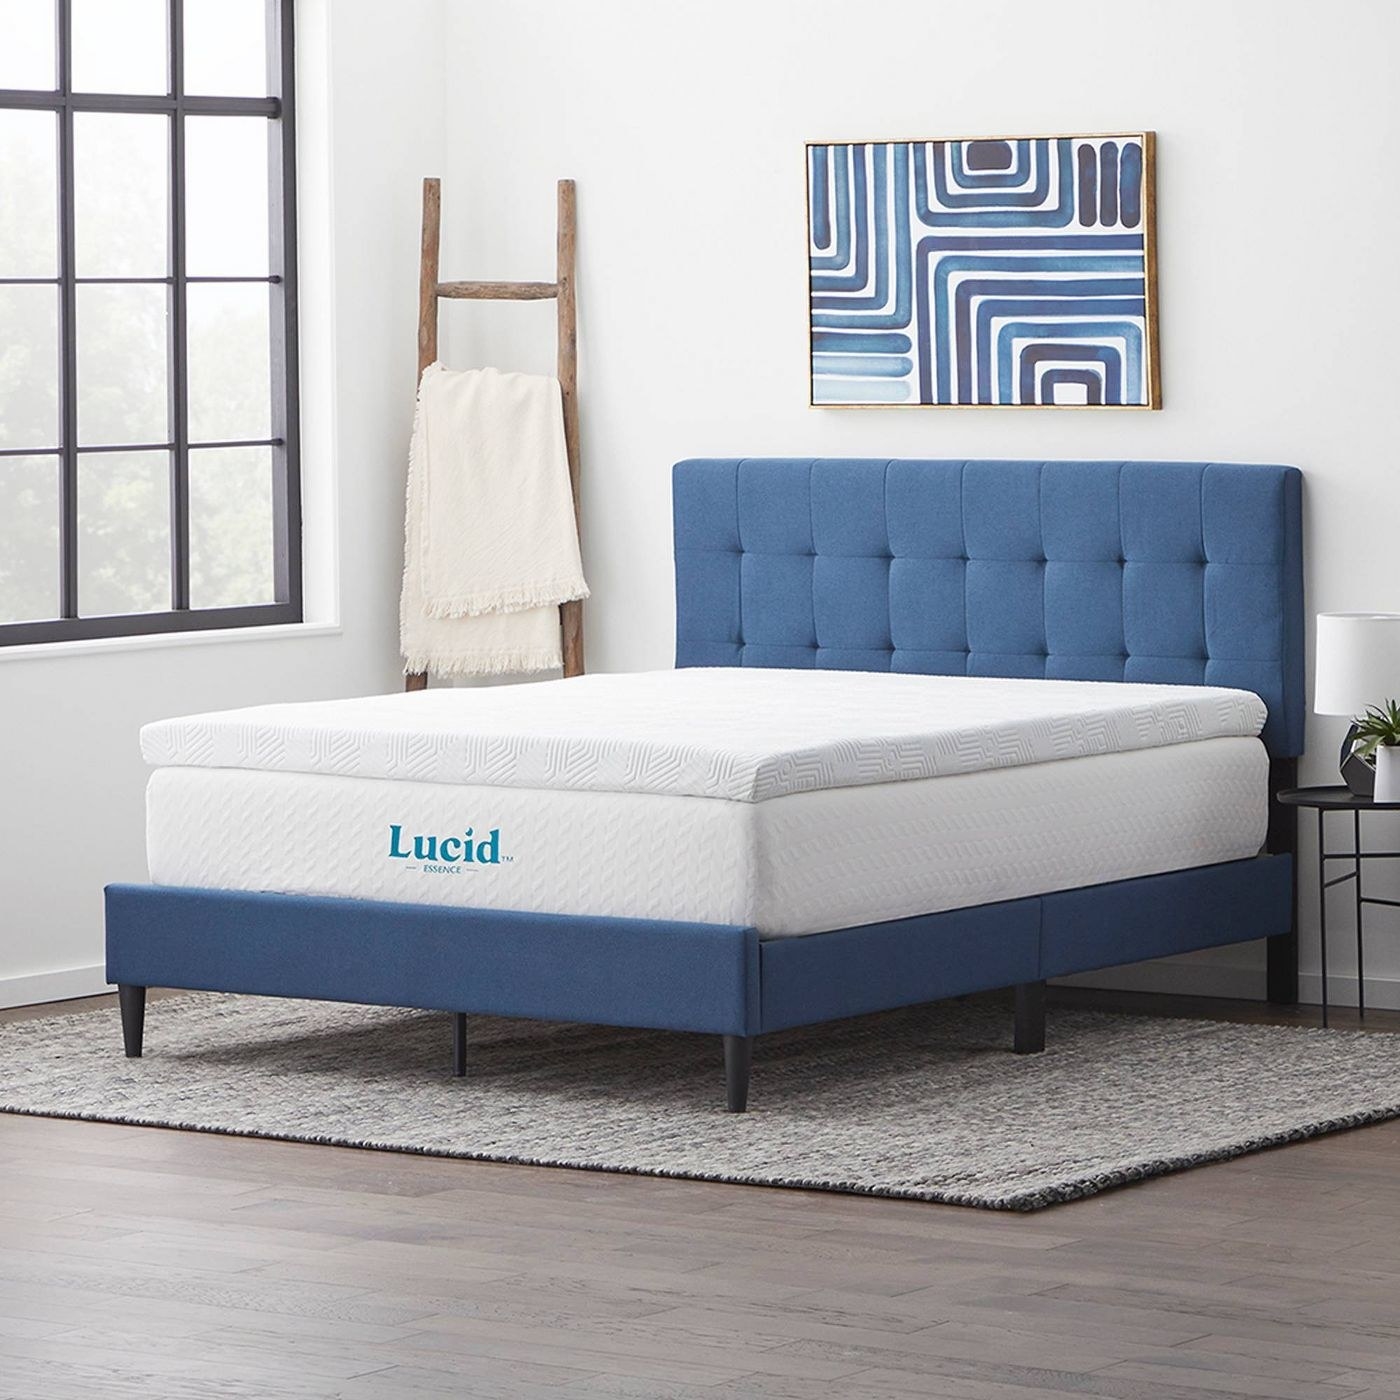 A mattress topper on a white mattress in a blue bed.